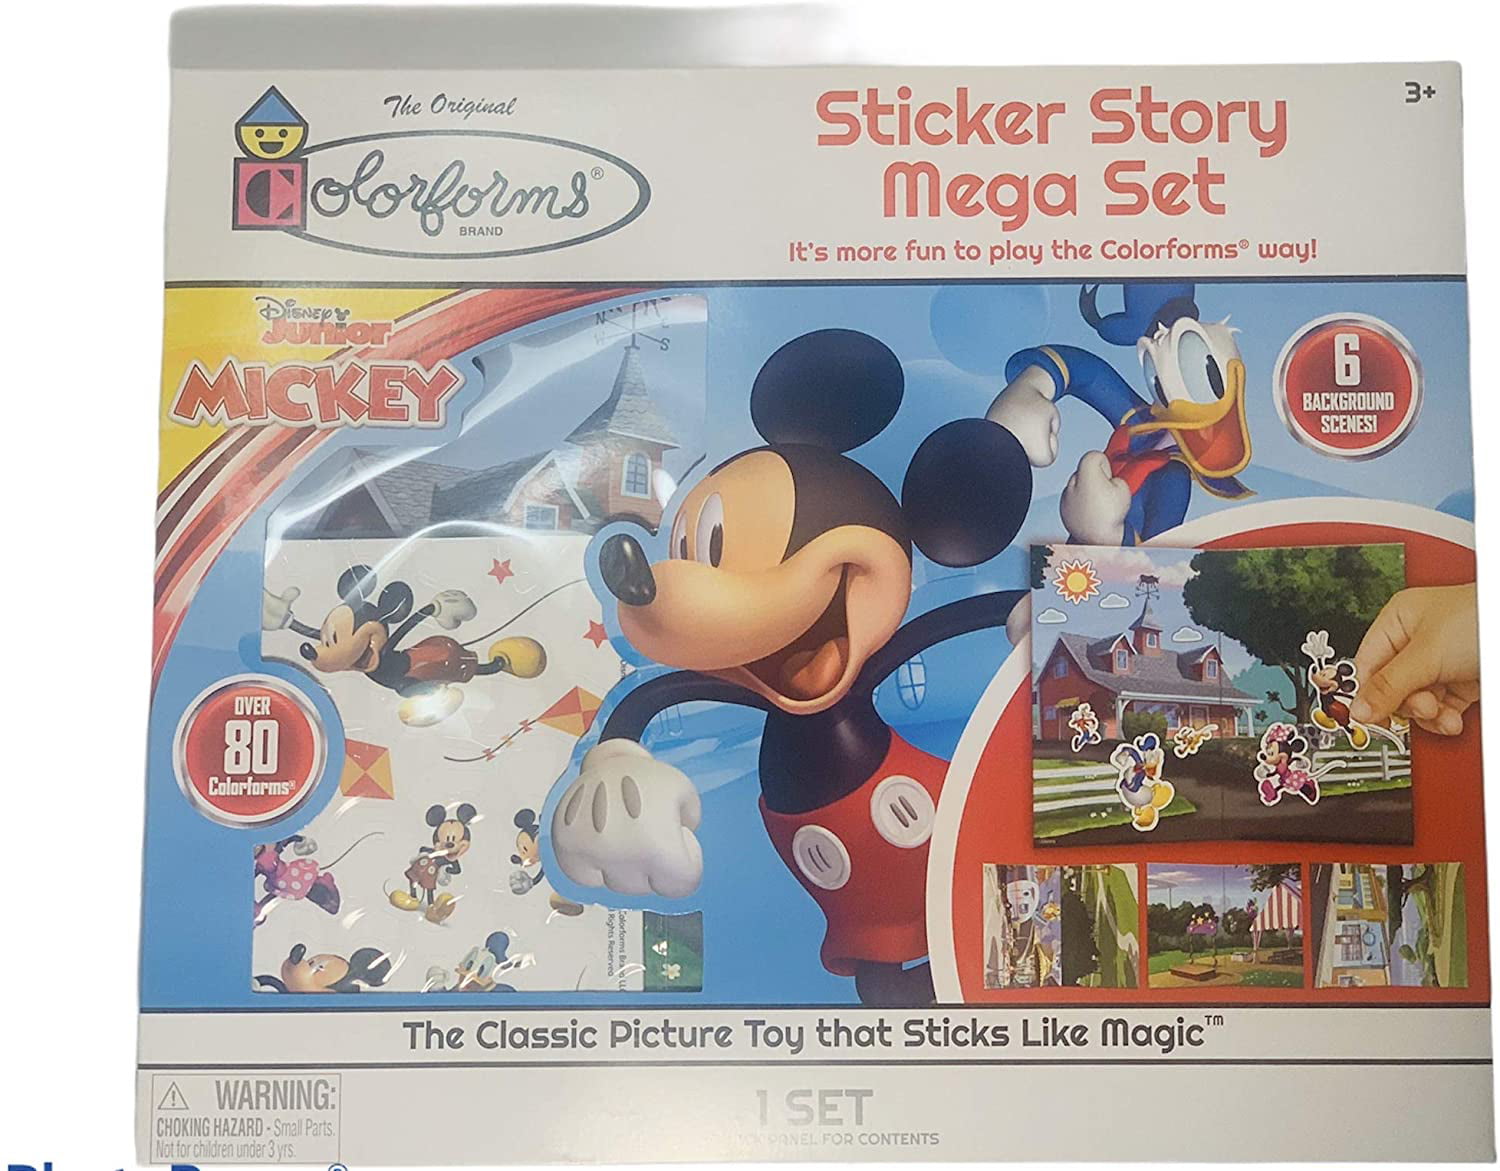 A29 Colorforms 80 Disney Junior Mickey Mouse Sticker Story Mega Set for sale online 